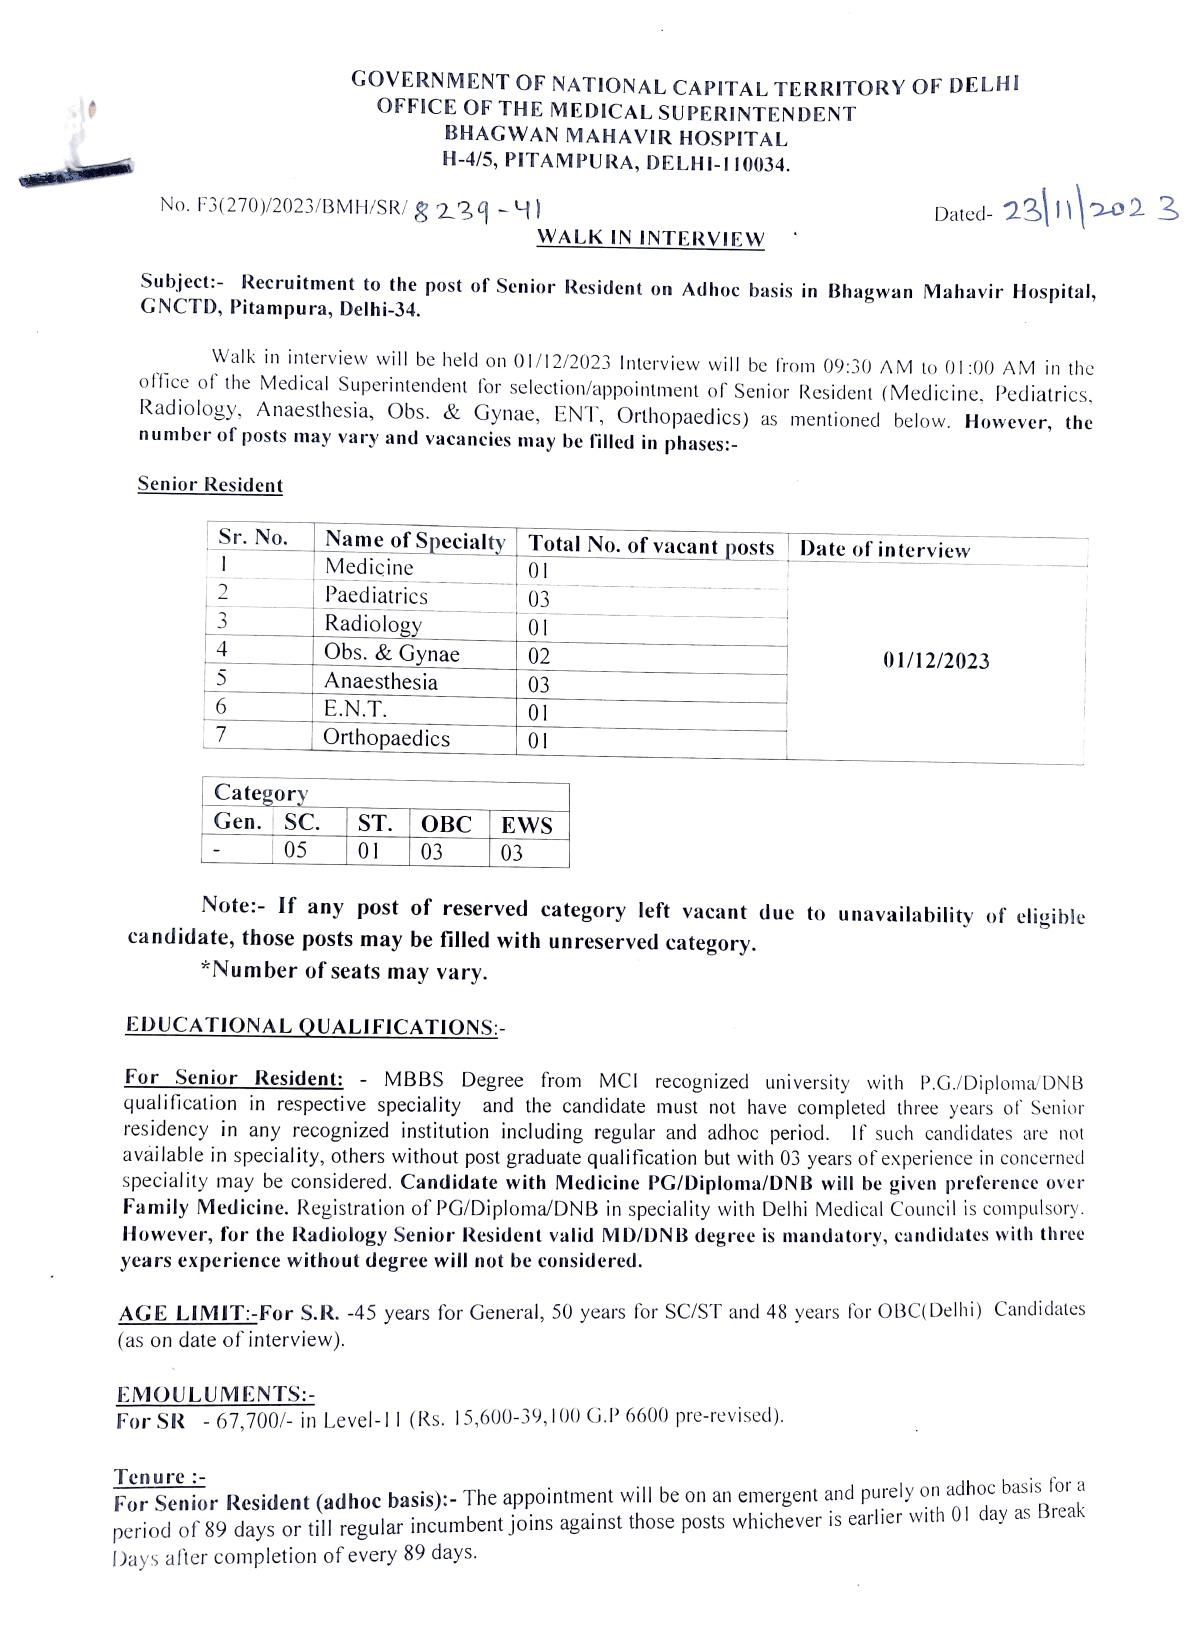 Bhagwan Mahavir Hospital Senior Resident Recruitment 2023 - Page 2